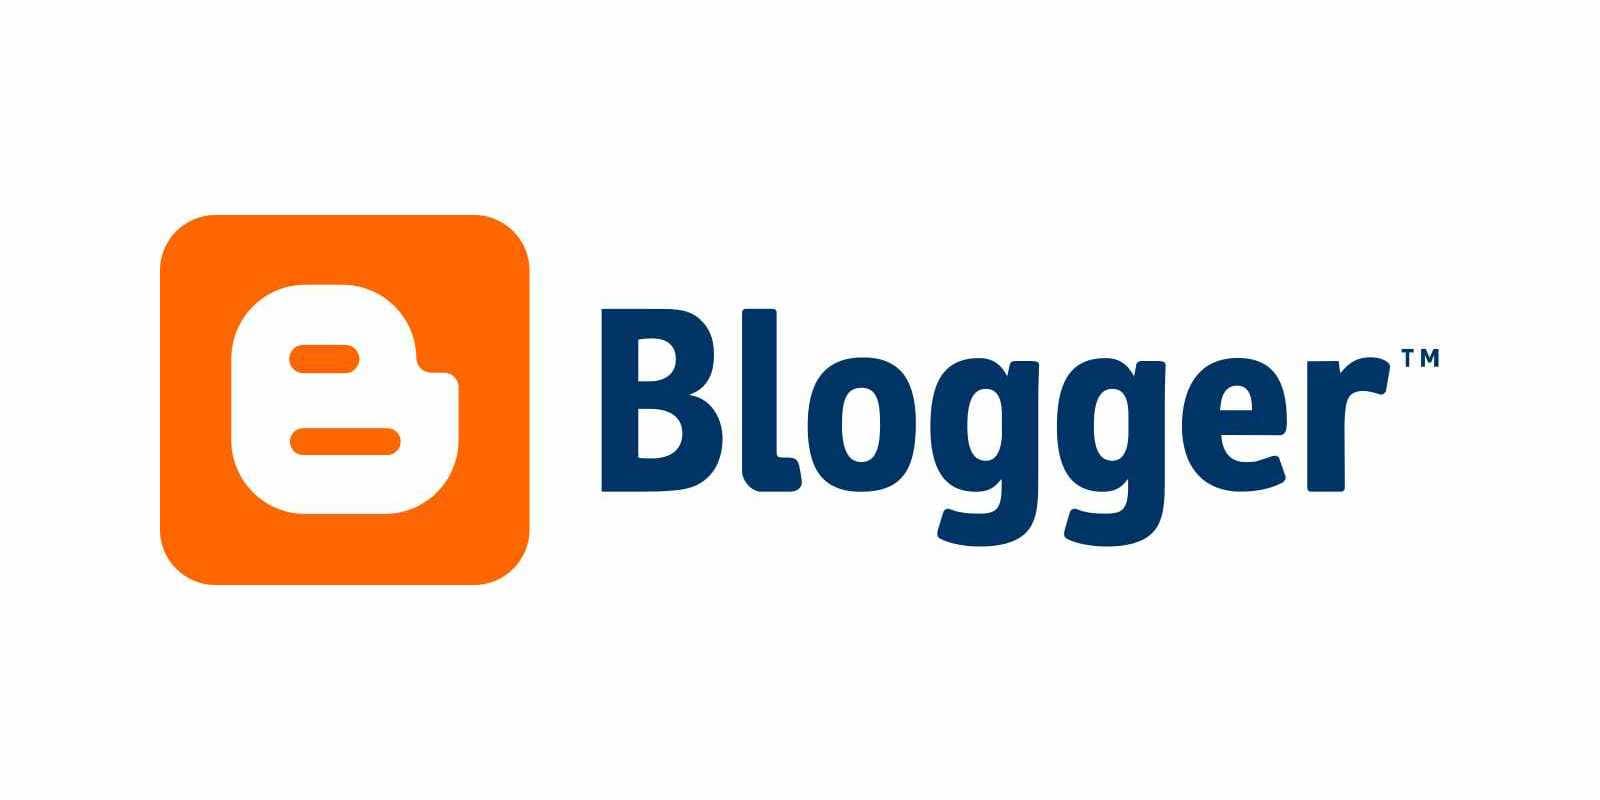 Blog Website Accepts Guest Post